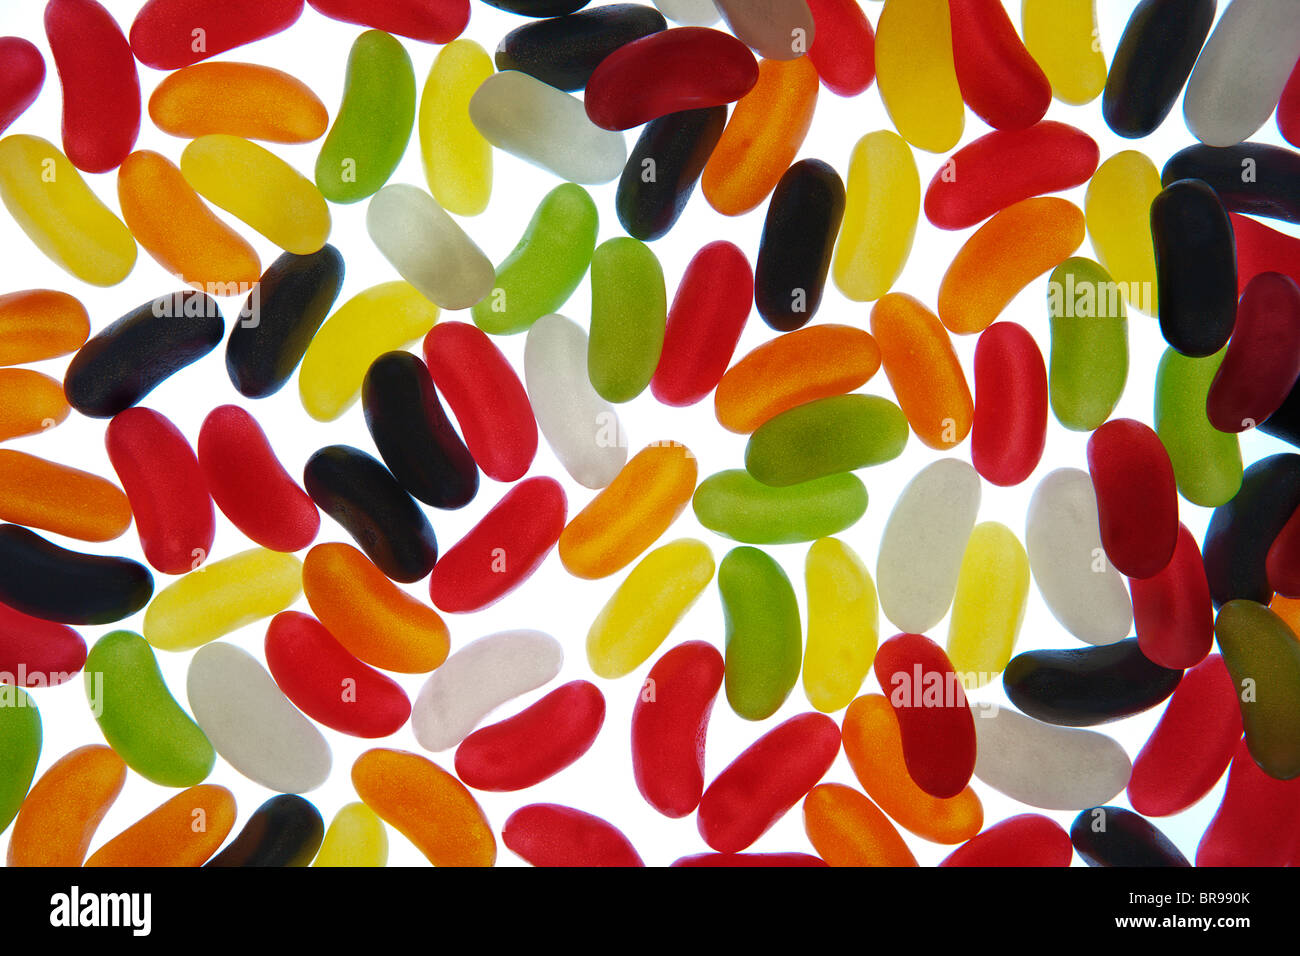 Muchos Jelly Beans dulces sobre un fondo blanco tierra Foto de stock